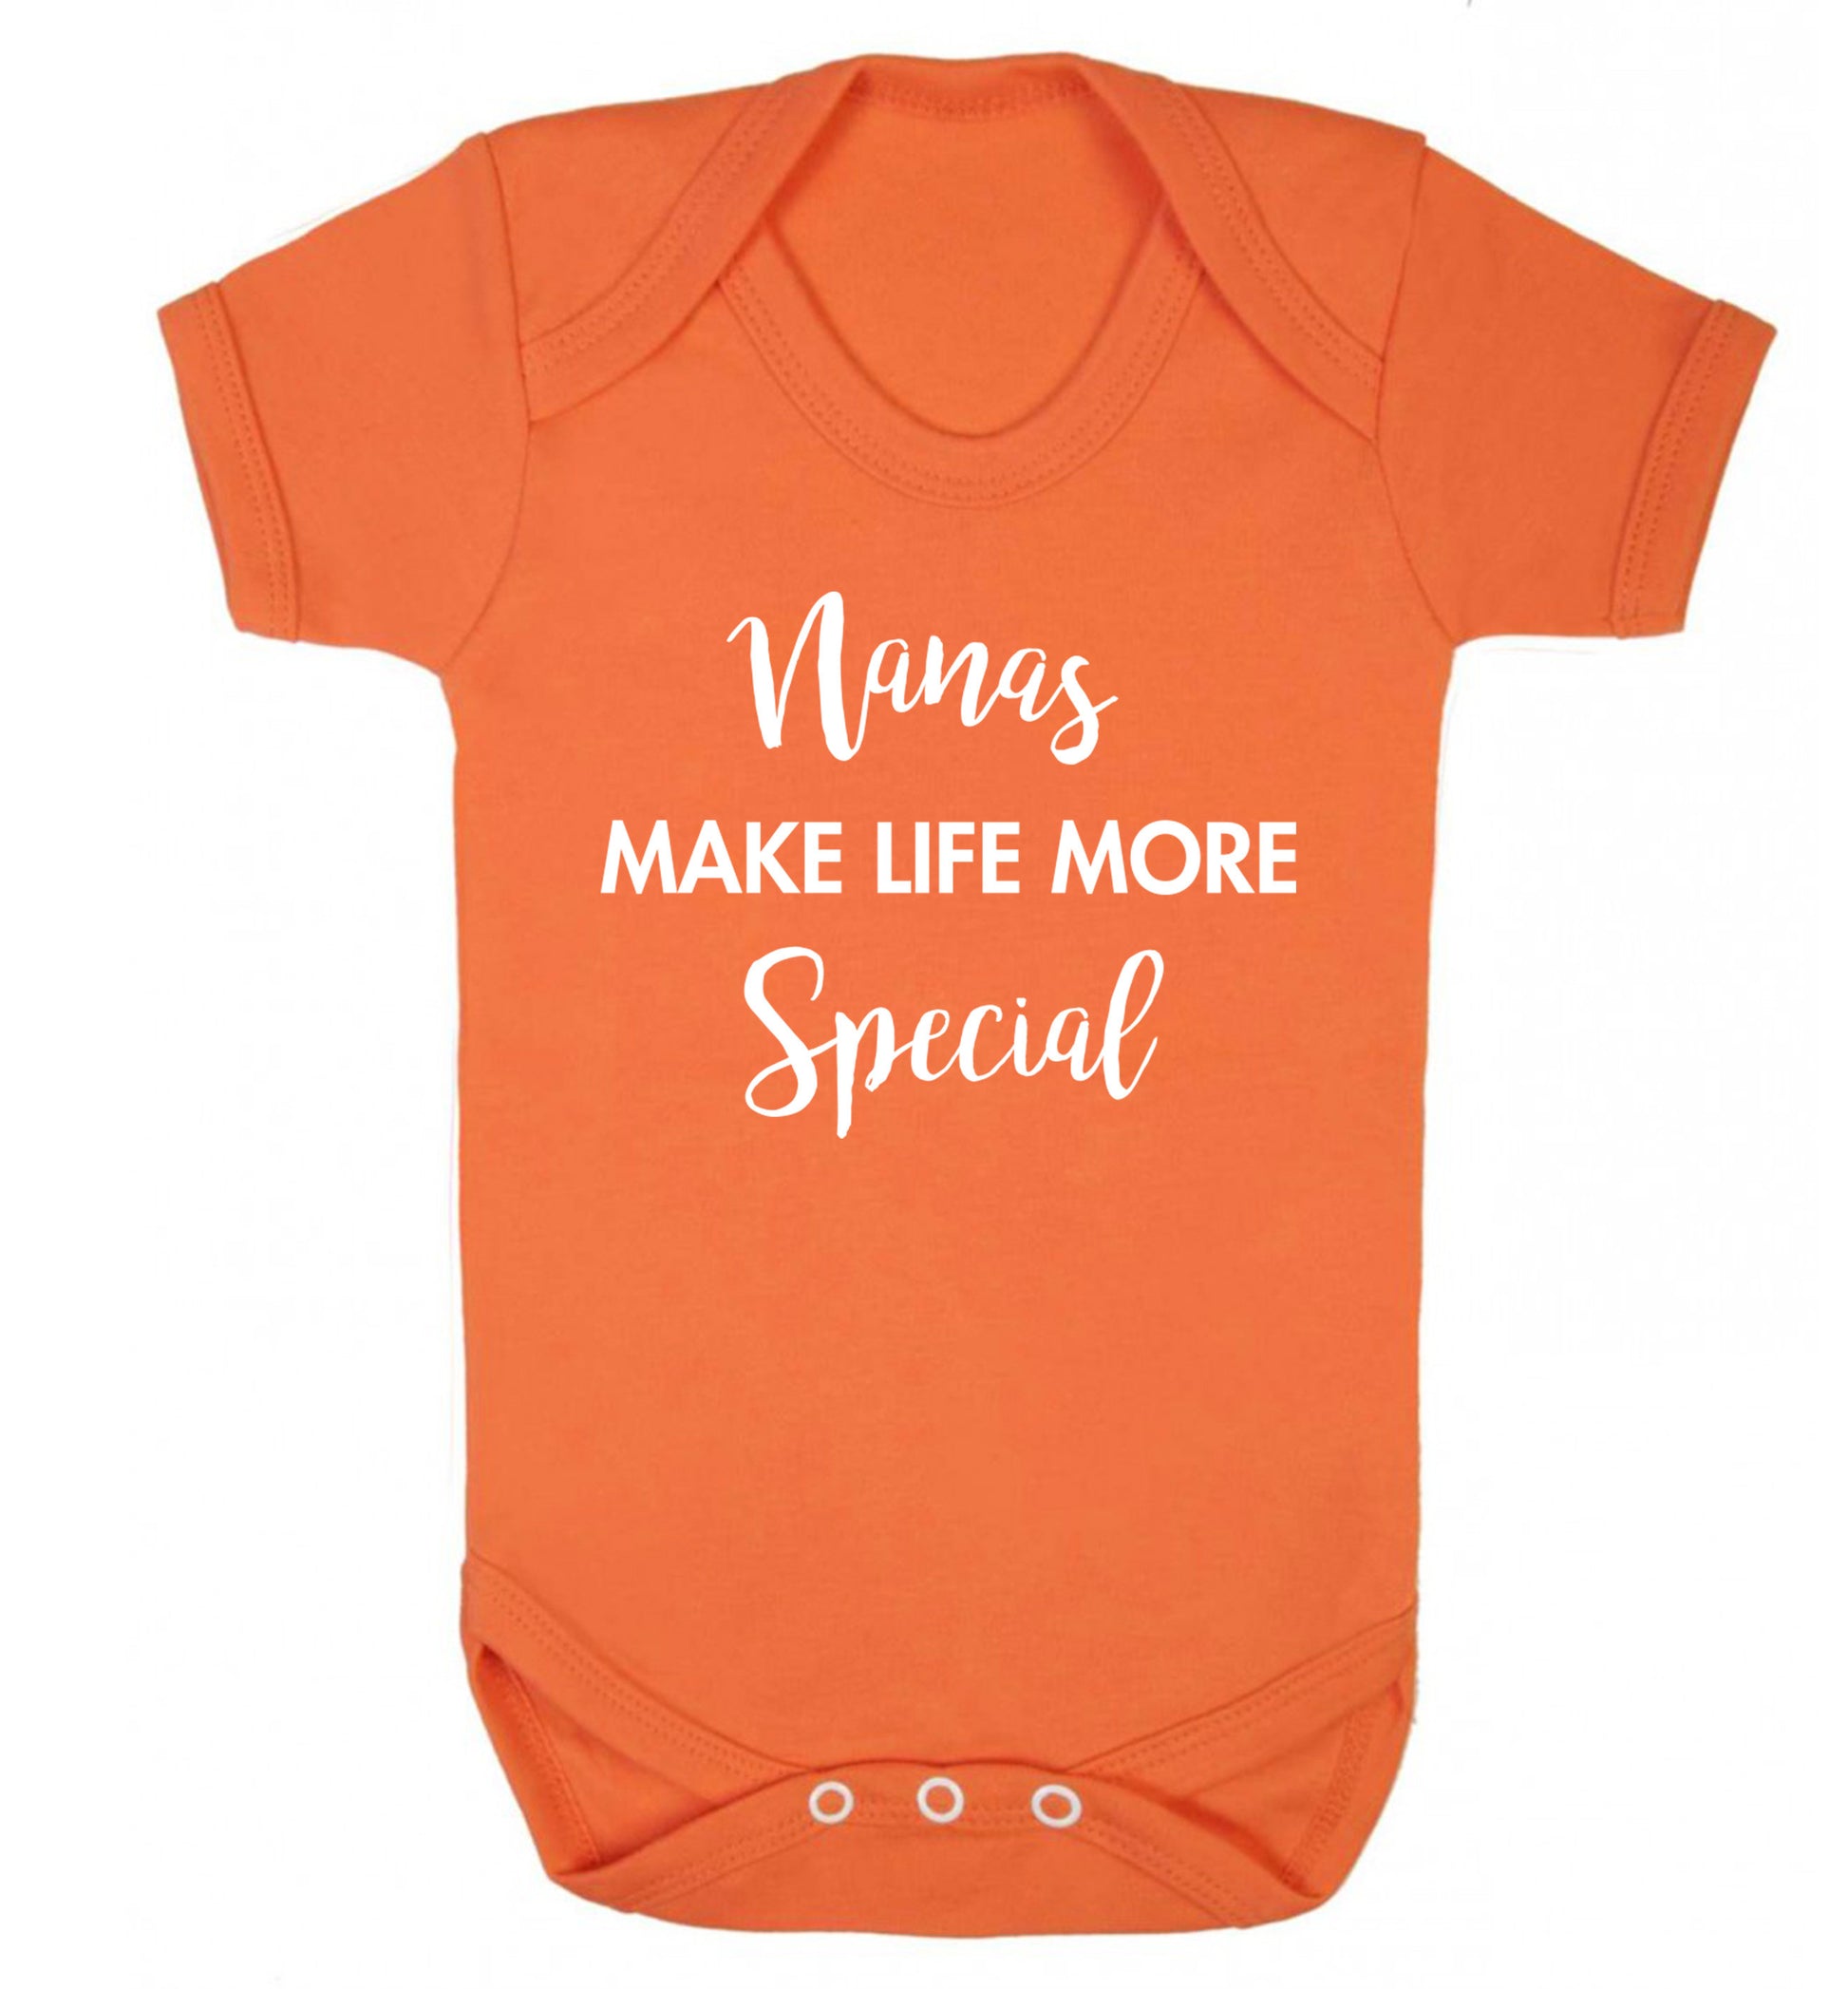 Nanas make life more special Baby Vest orange 18-24 months